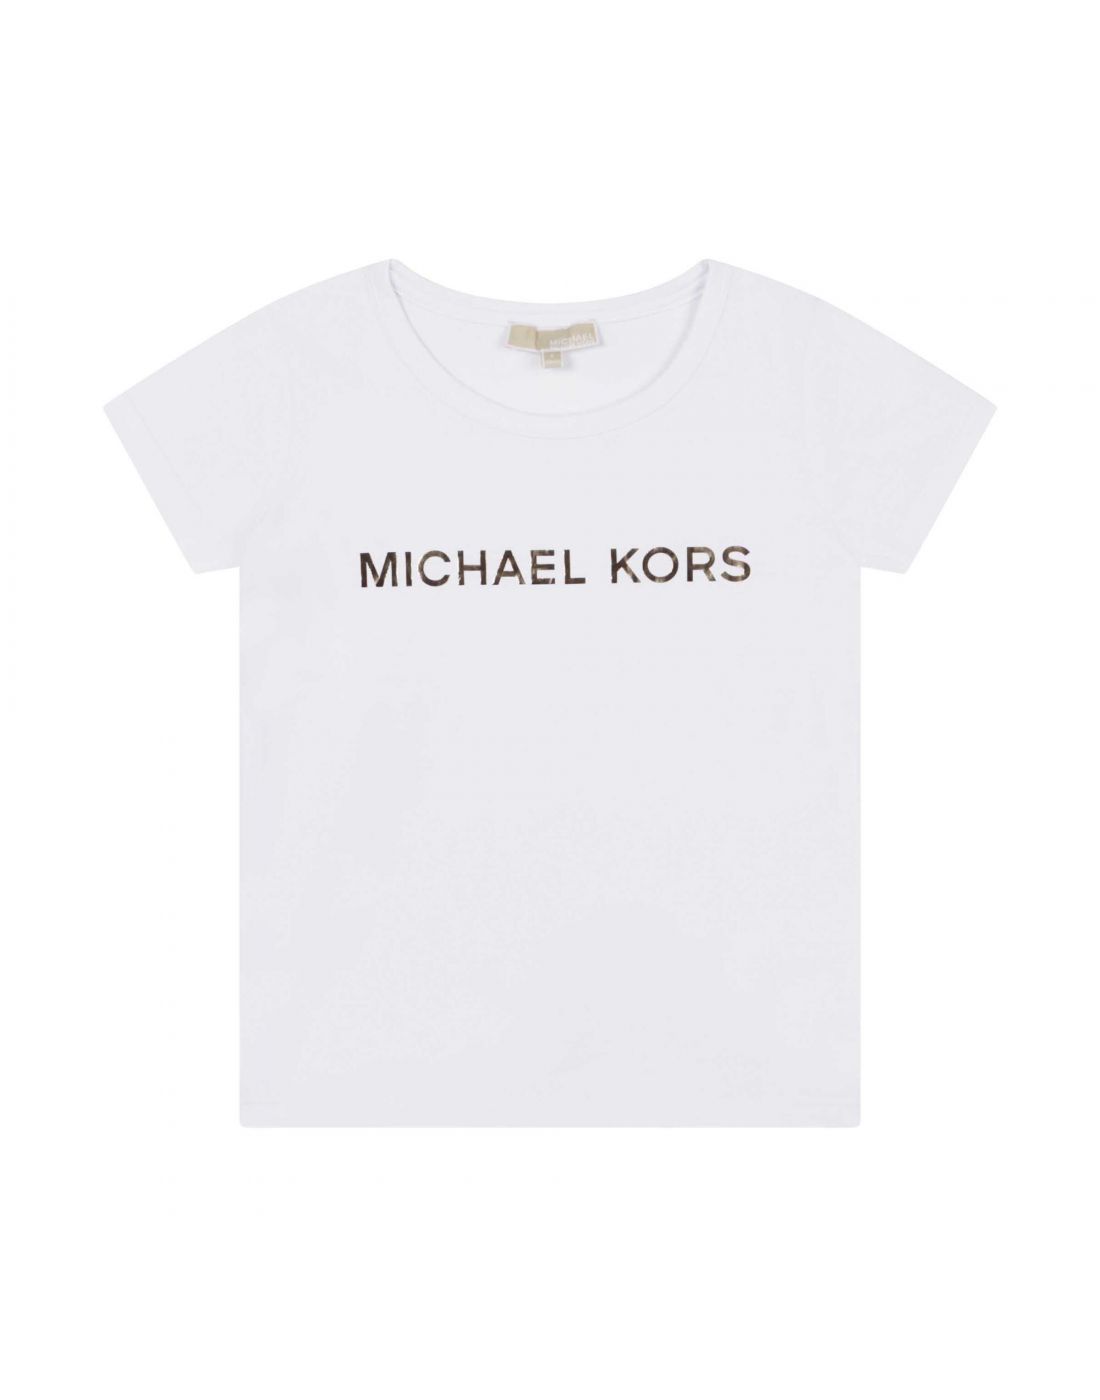 Michael Kors Girls Print Top